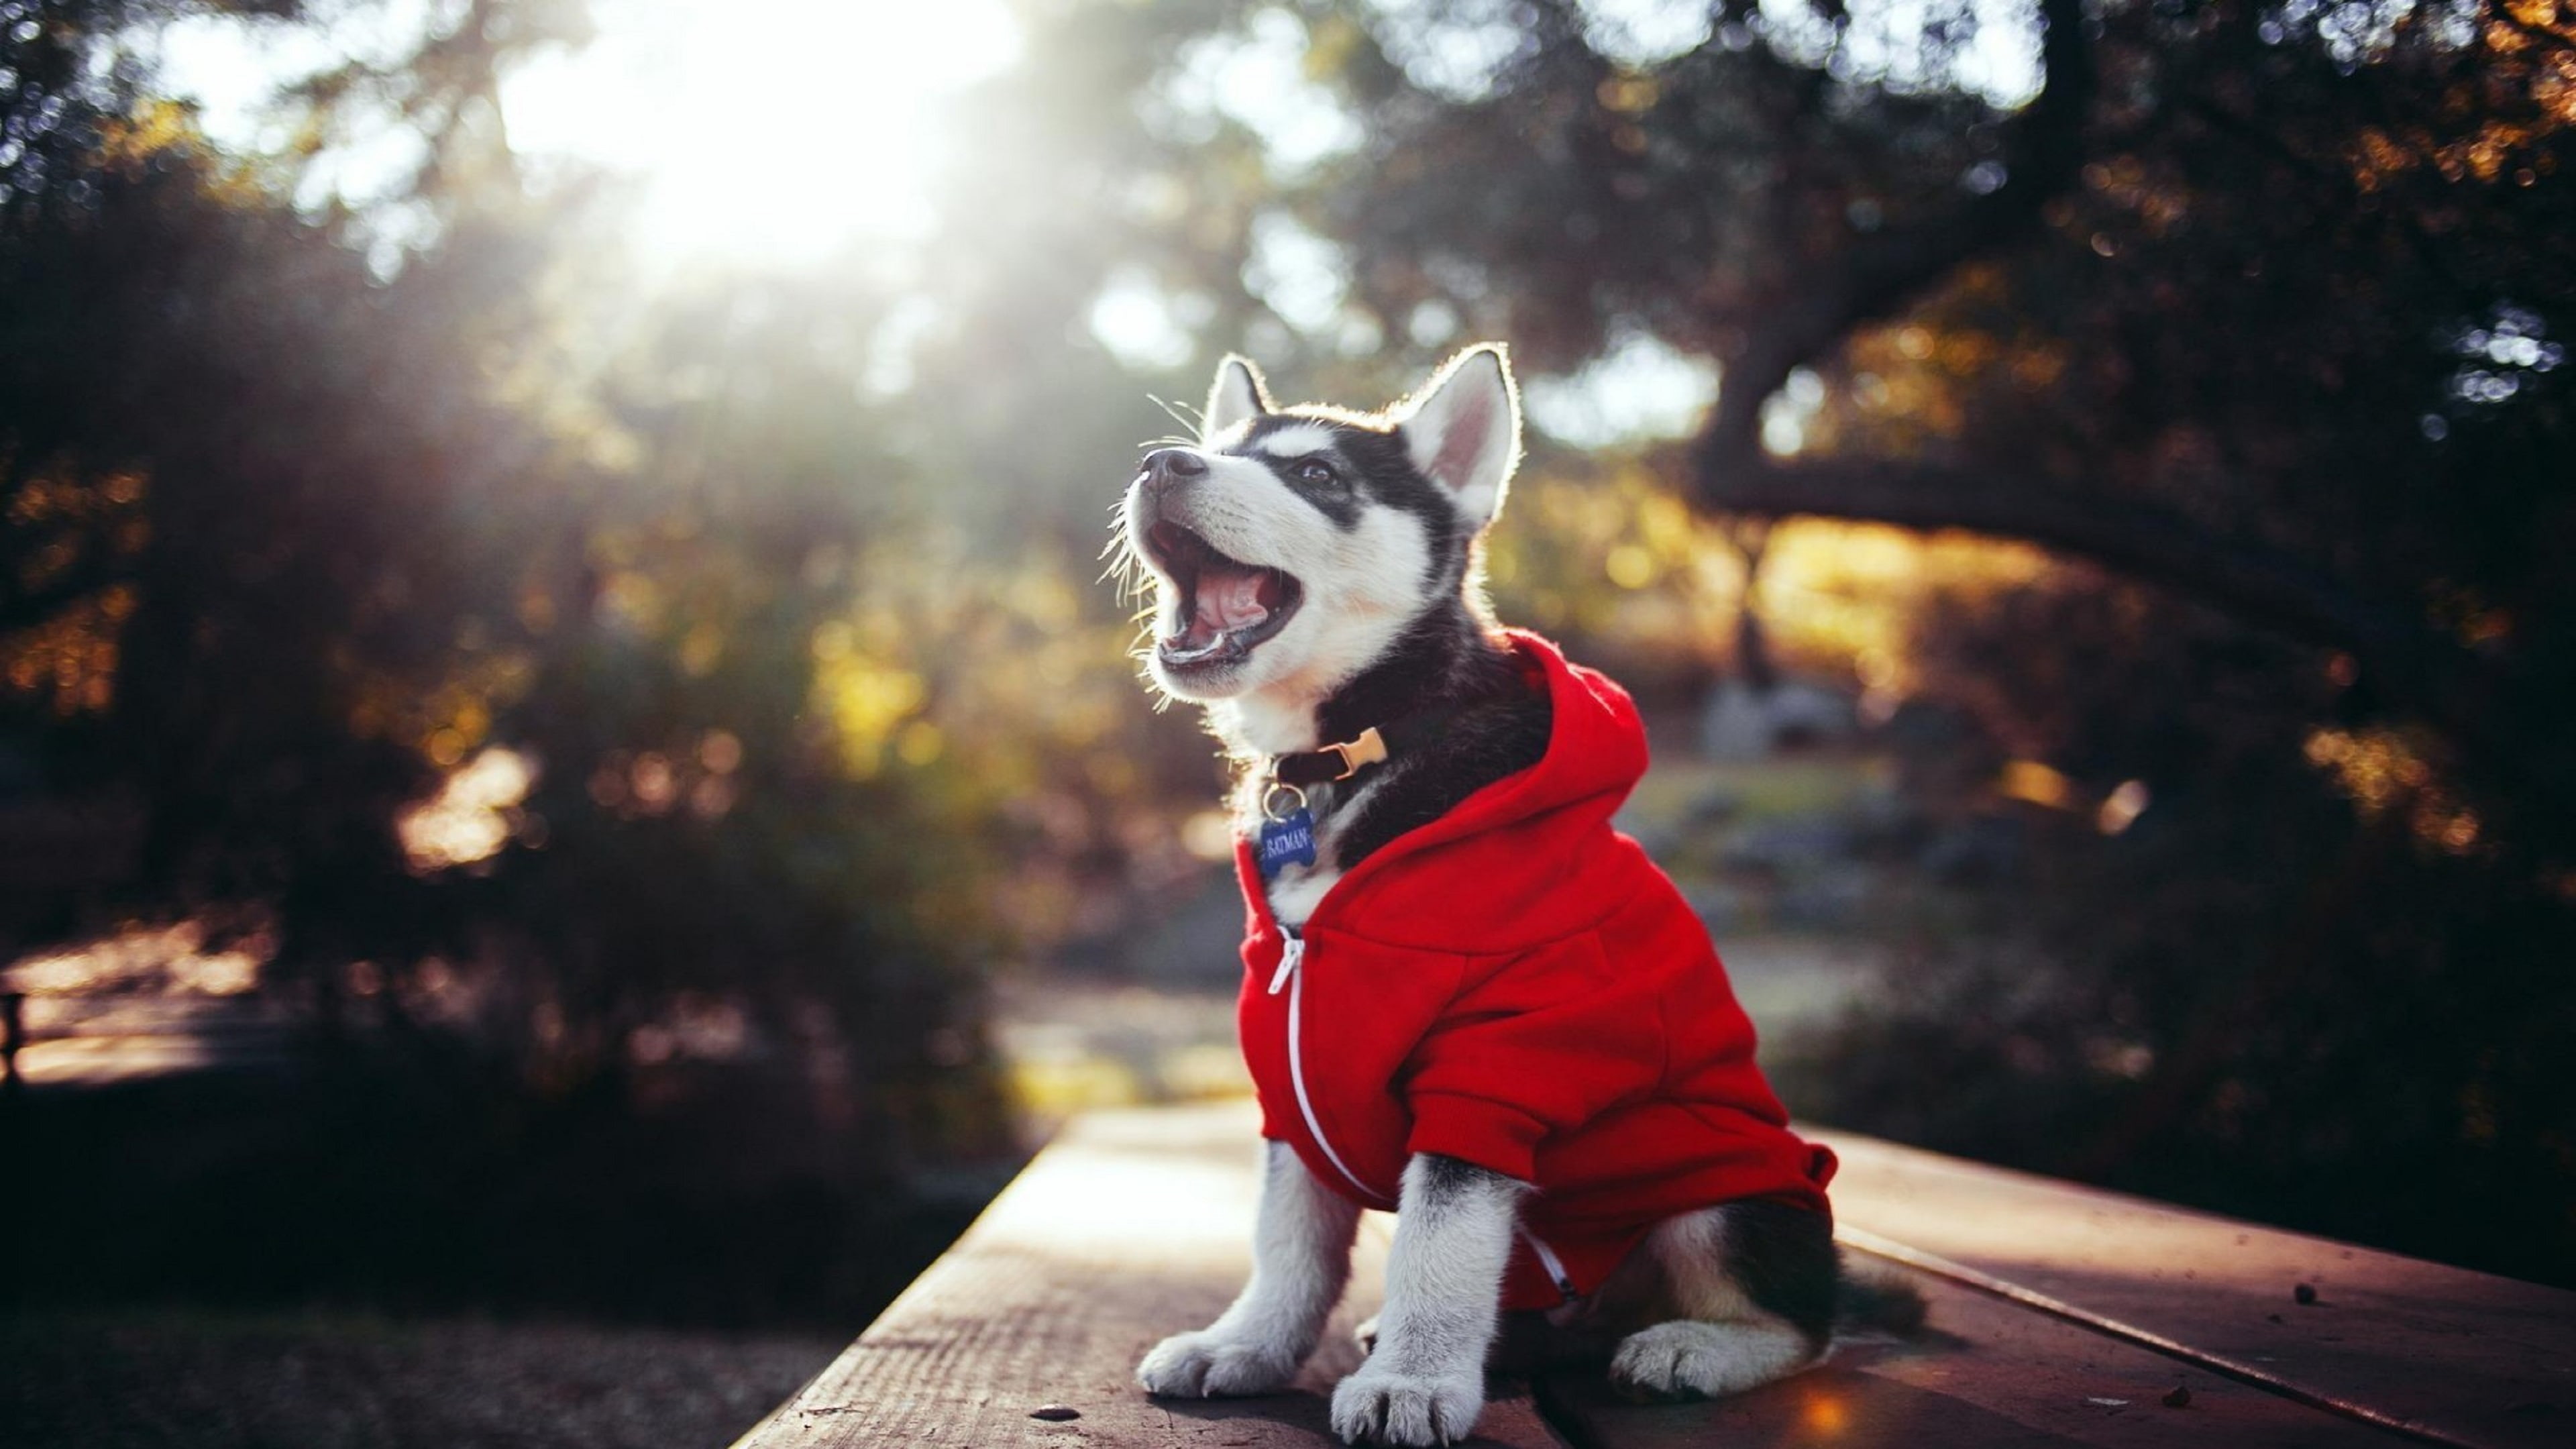 red coat, clothing, photograph, dog, tree, autumn, fun, sunlight